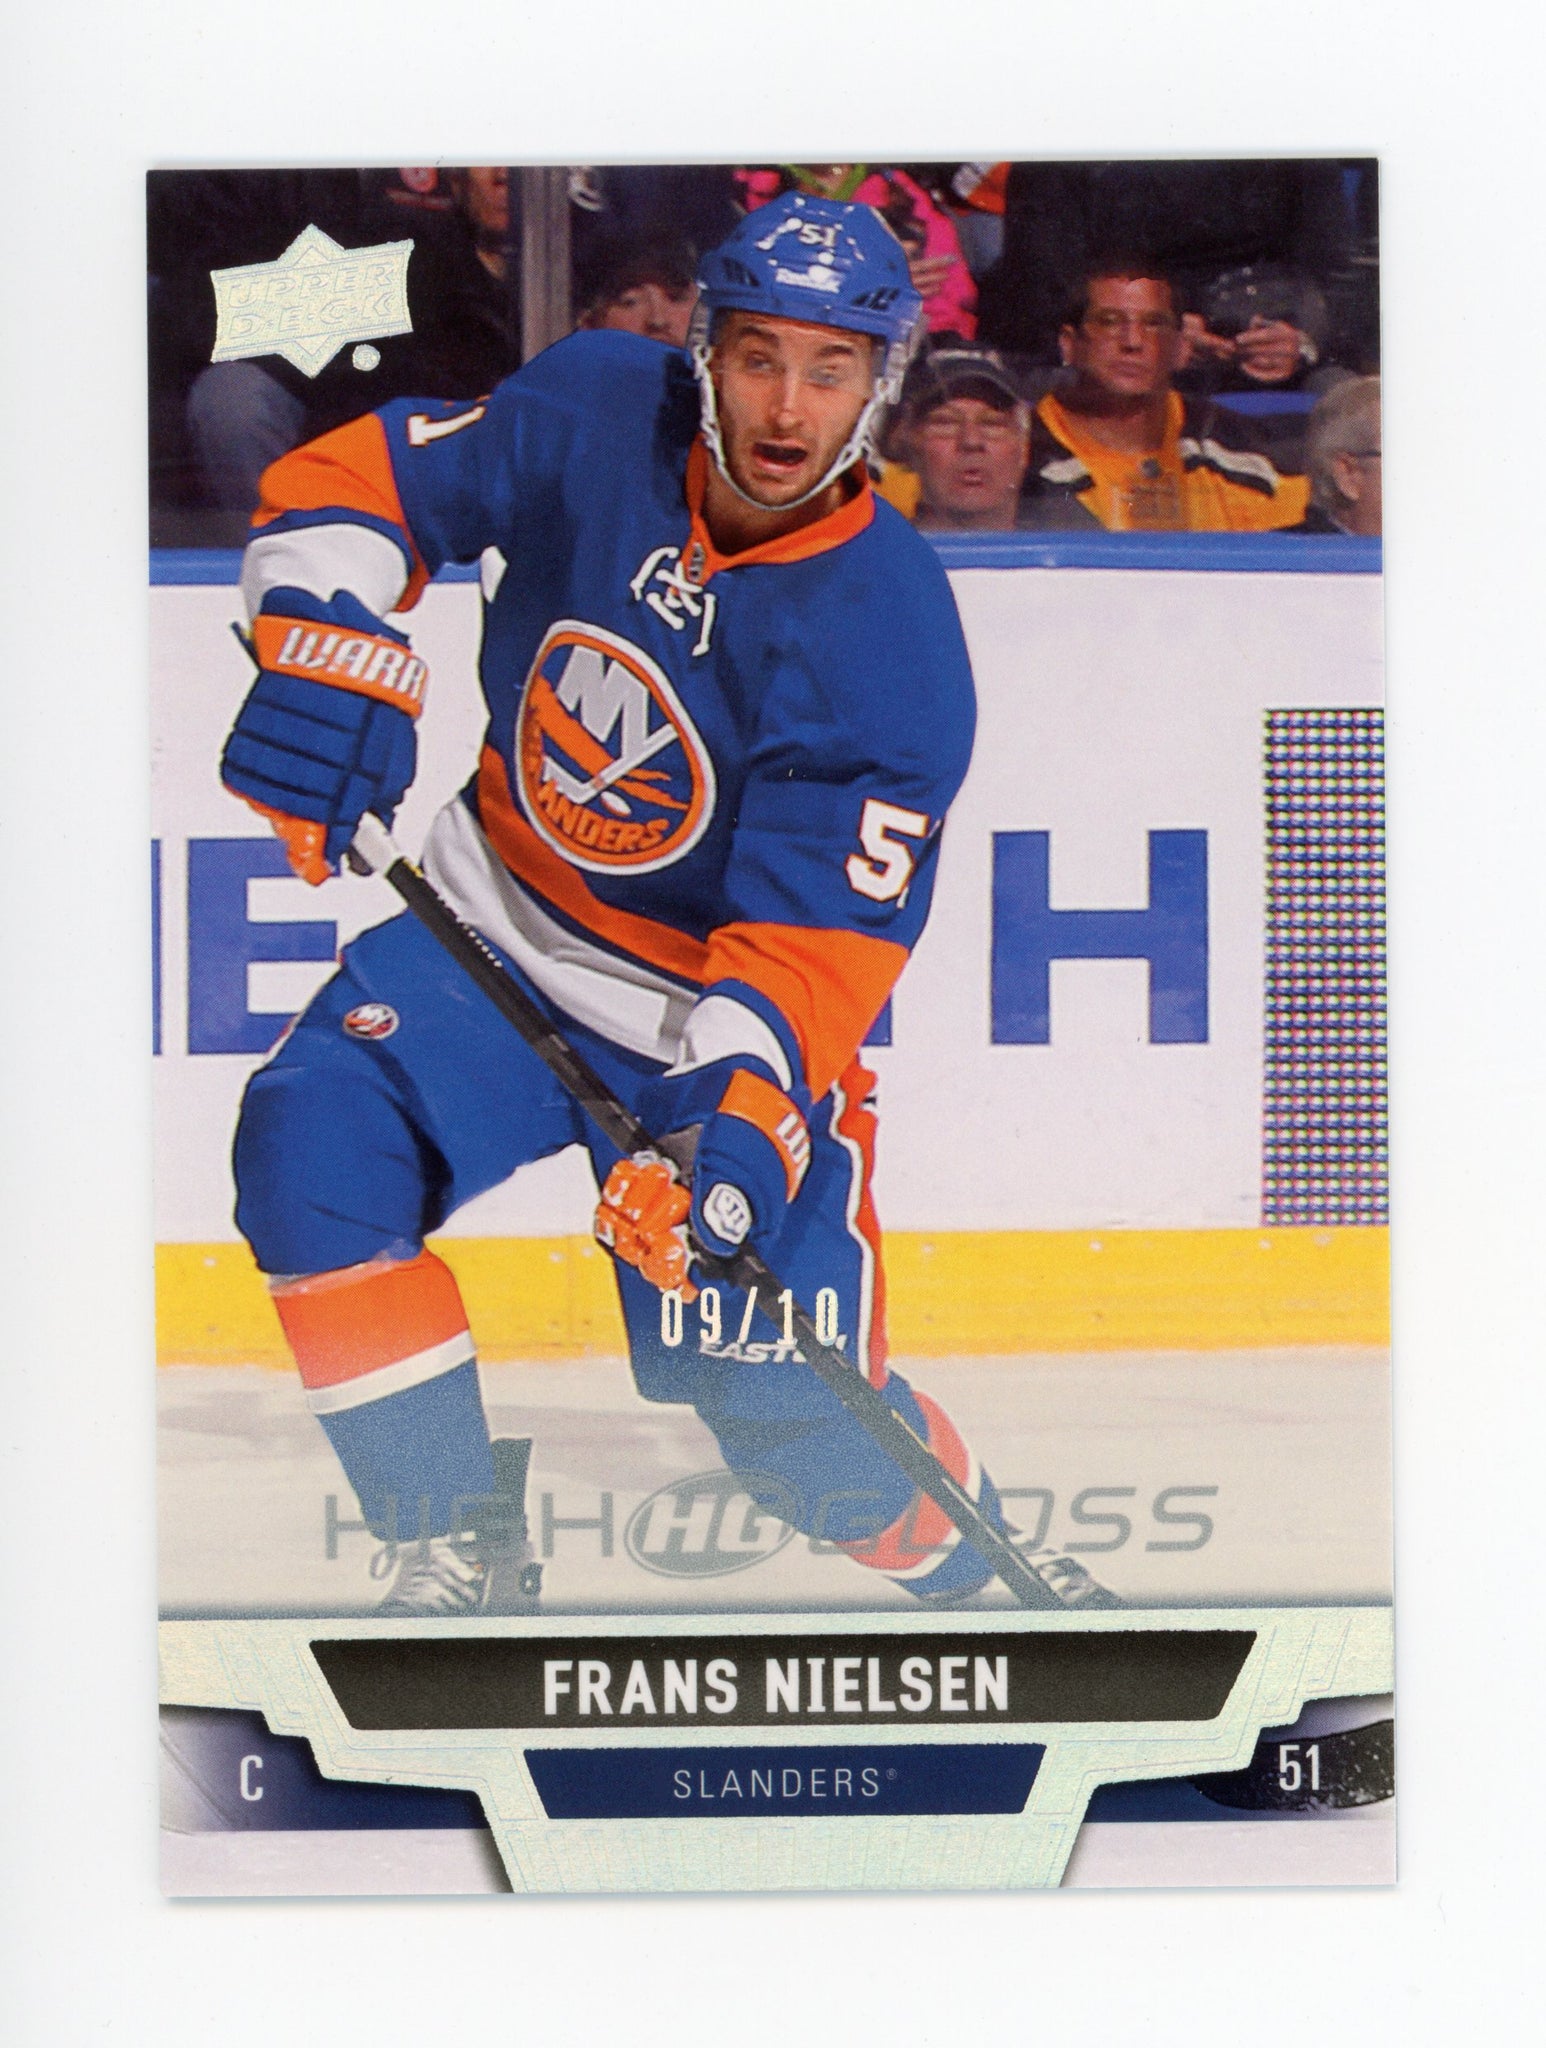 2013-2014 Frans Nielsen High Gloss #d /10 Series 1 New York Islanders #16